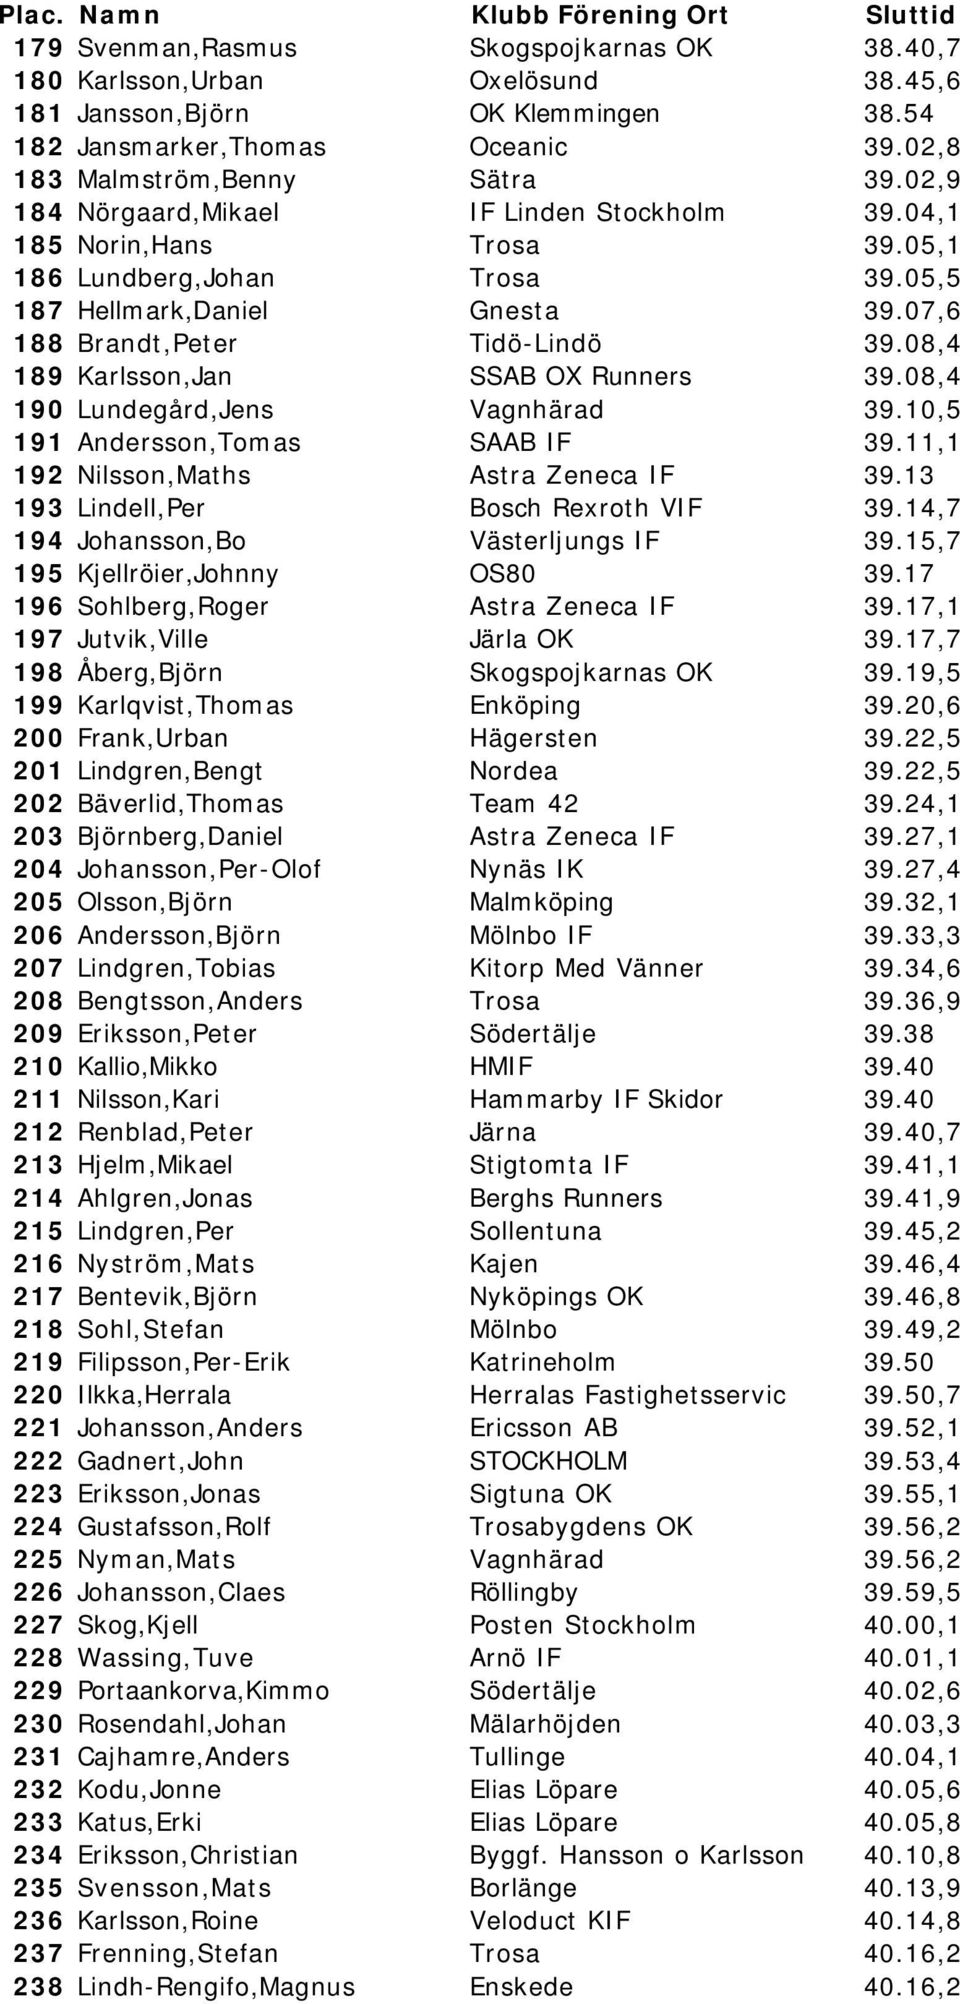 08,4 189 Karlsson,Jan SSAB OX Runners 39.08,4 190 Lundegård,Jens Vagnhärad 39.10,5 191 Andersson,Tomas SAAB IF 39.11,1 192 Nilsson,Maths Astra Zeneca IF 39.13 193 Lindell,Per Bosch Rexroth VIF 39.